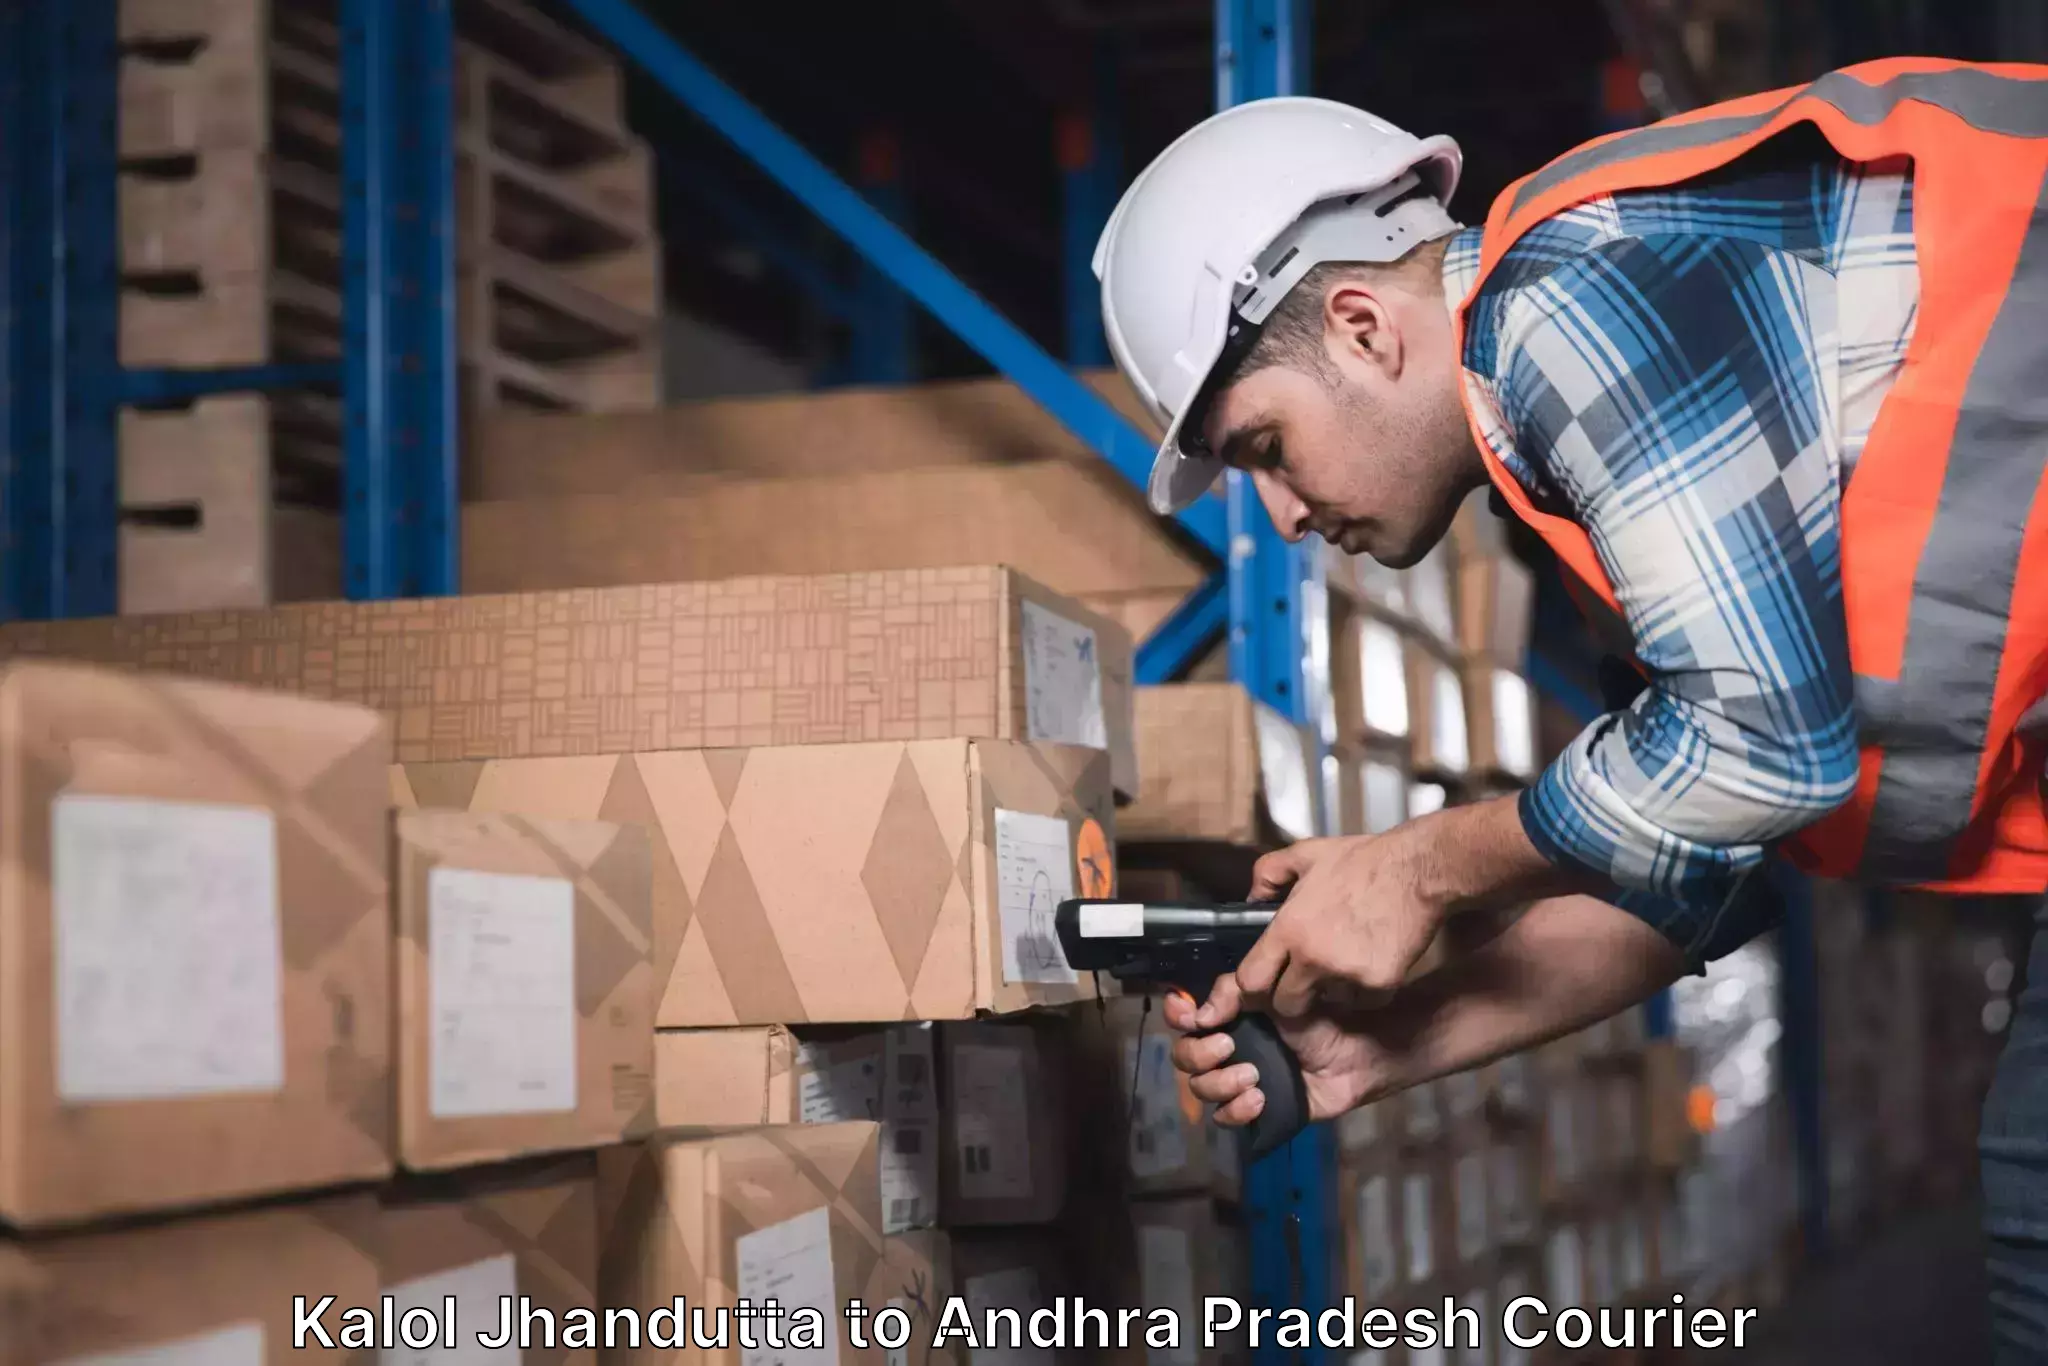 Professional courier handling Kalol Jhandutta to Veldurthi